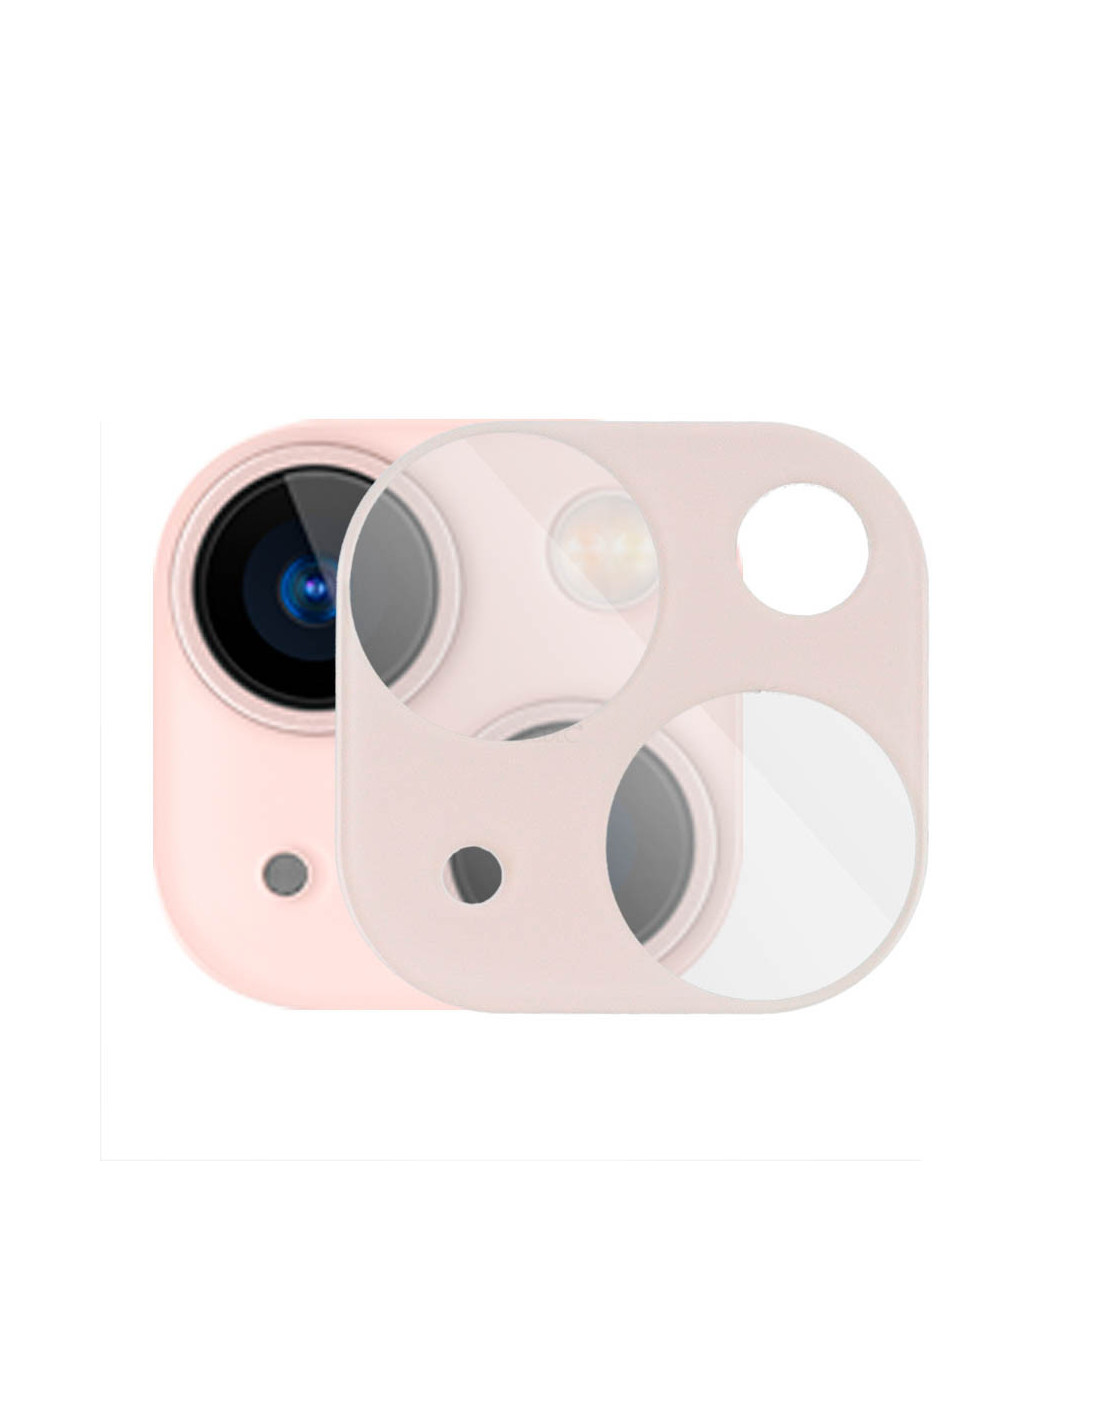 Cristal Templado Cámara iPhone 13 Pro Max > Smartphones > Protectores de  Pantalla